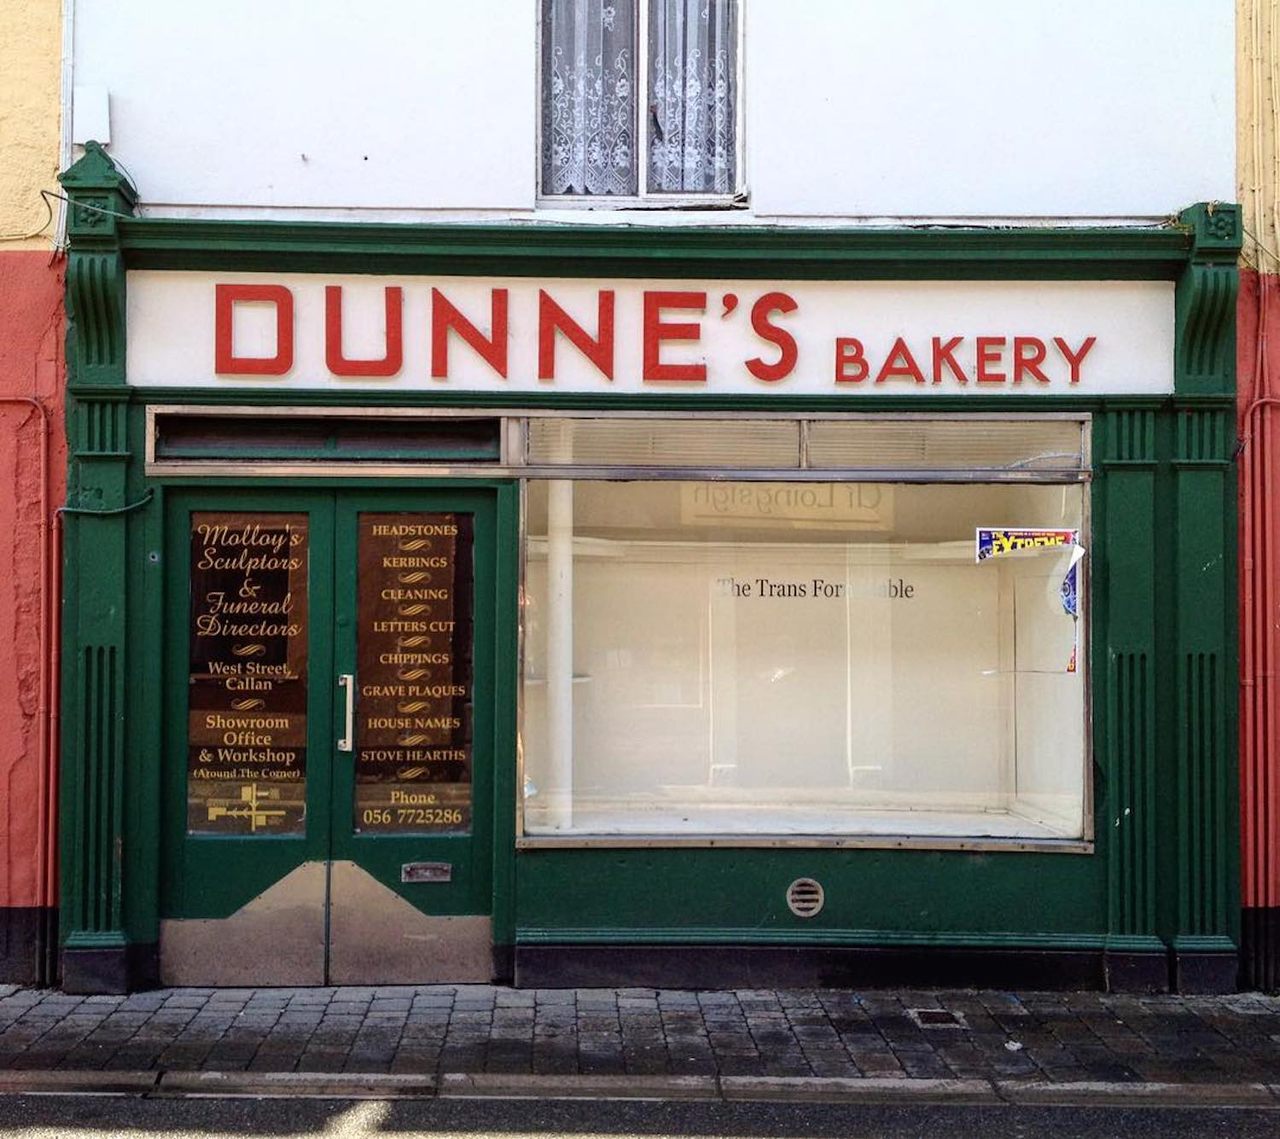 Dunne's Bakery, Callan, County Kilkenny.